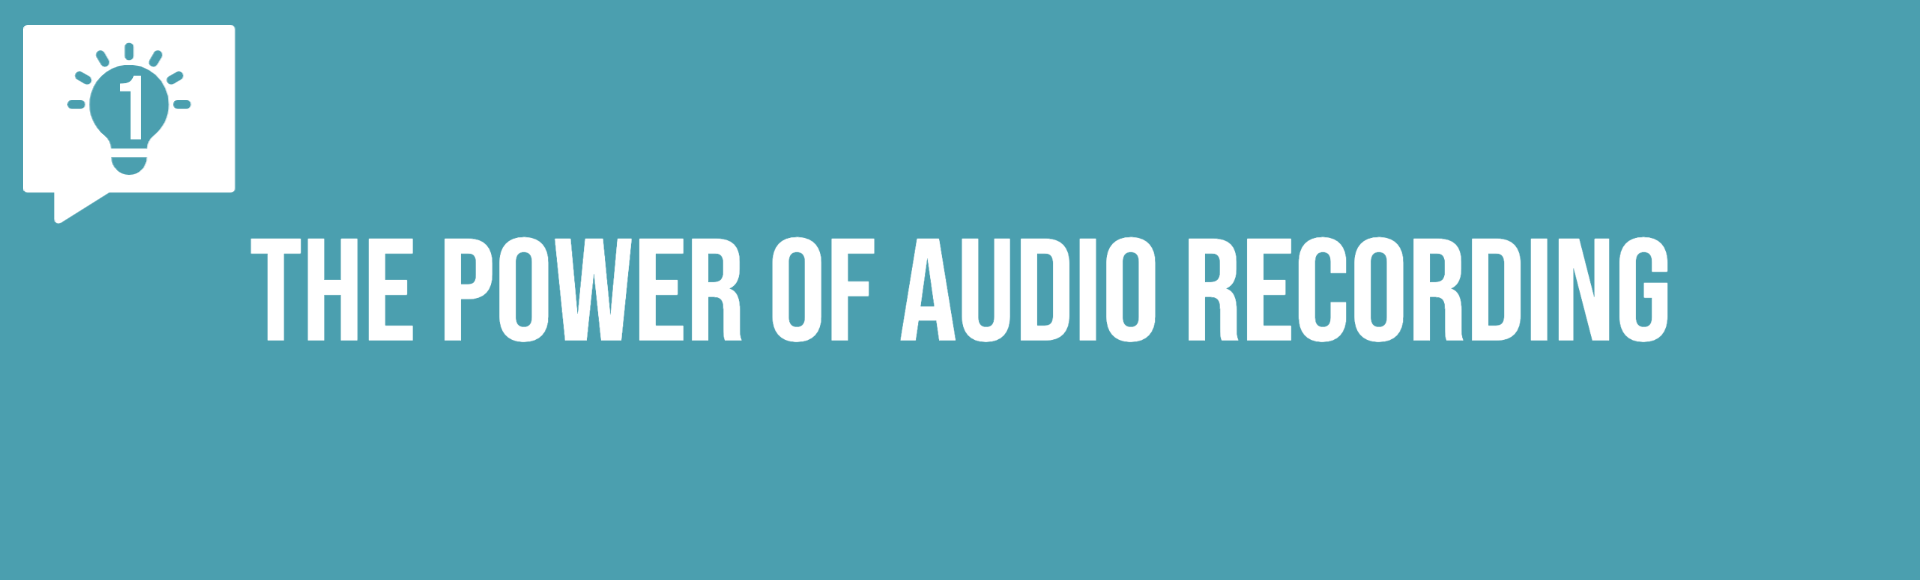 The power of audio recording